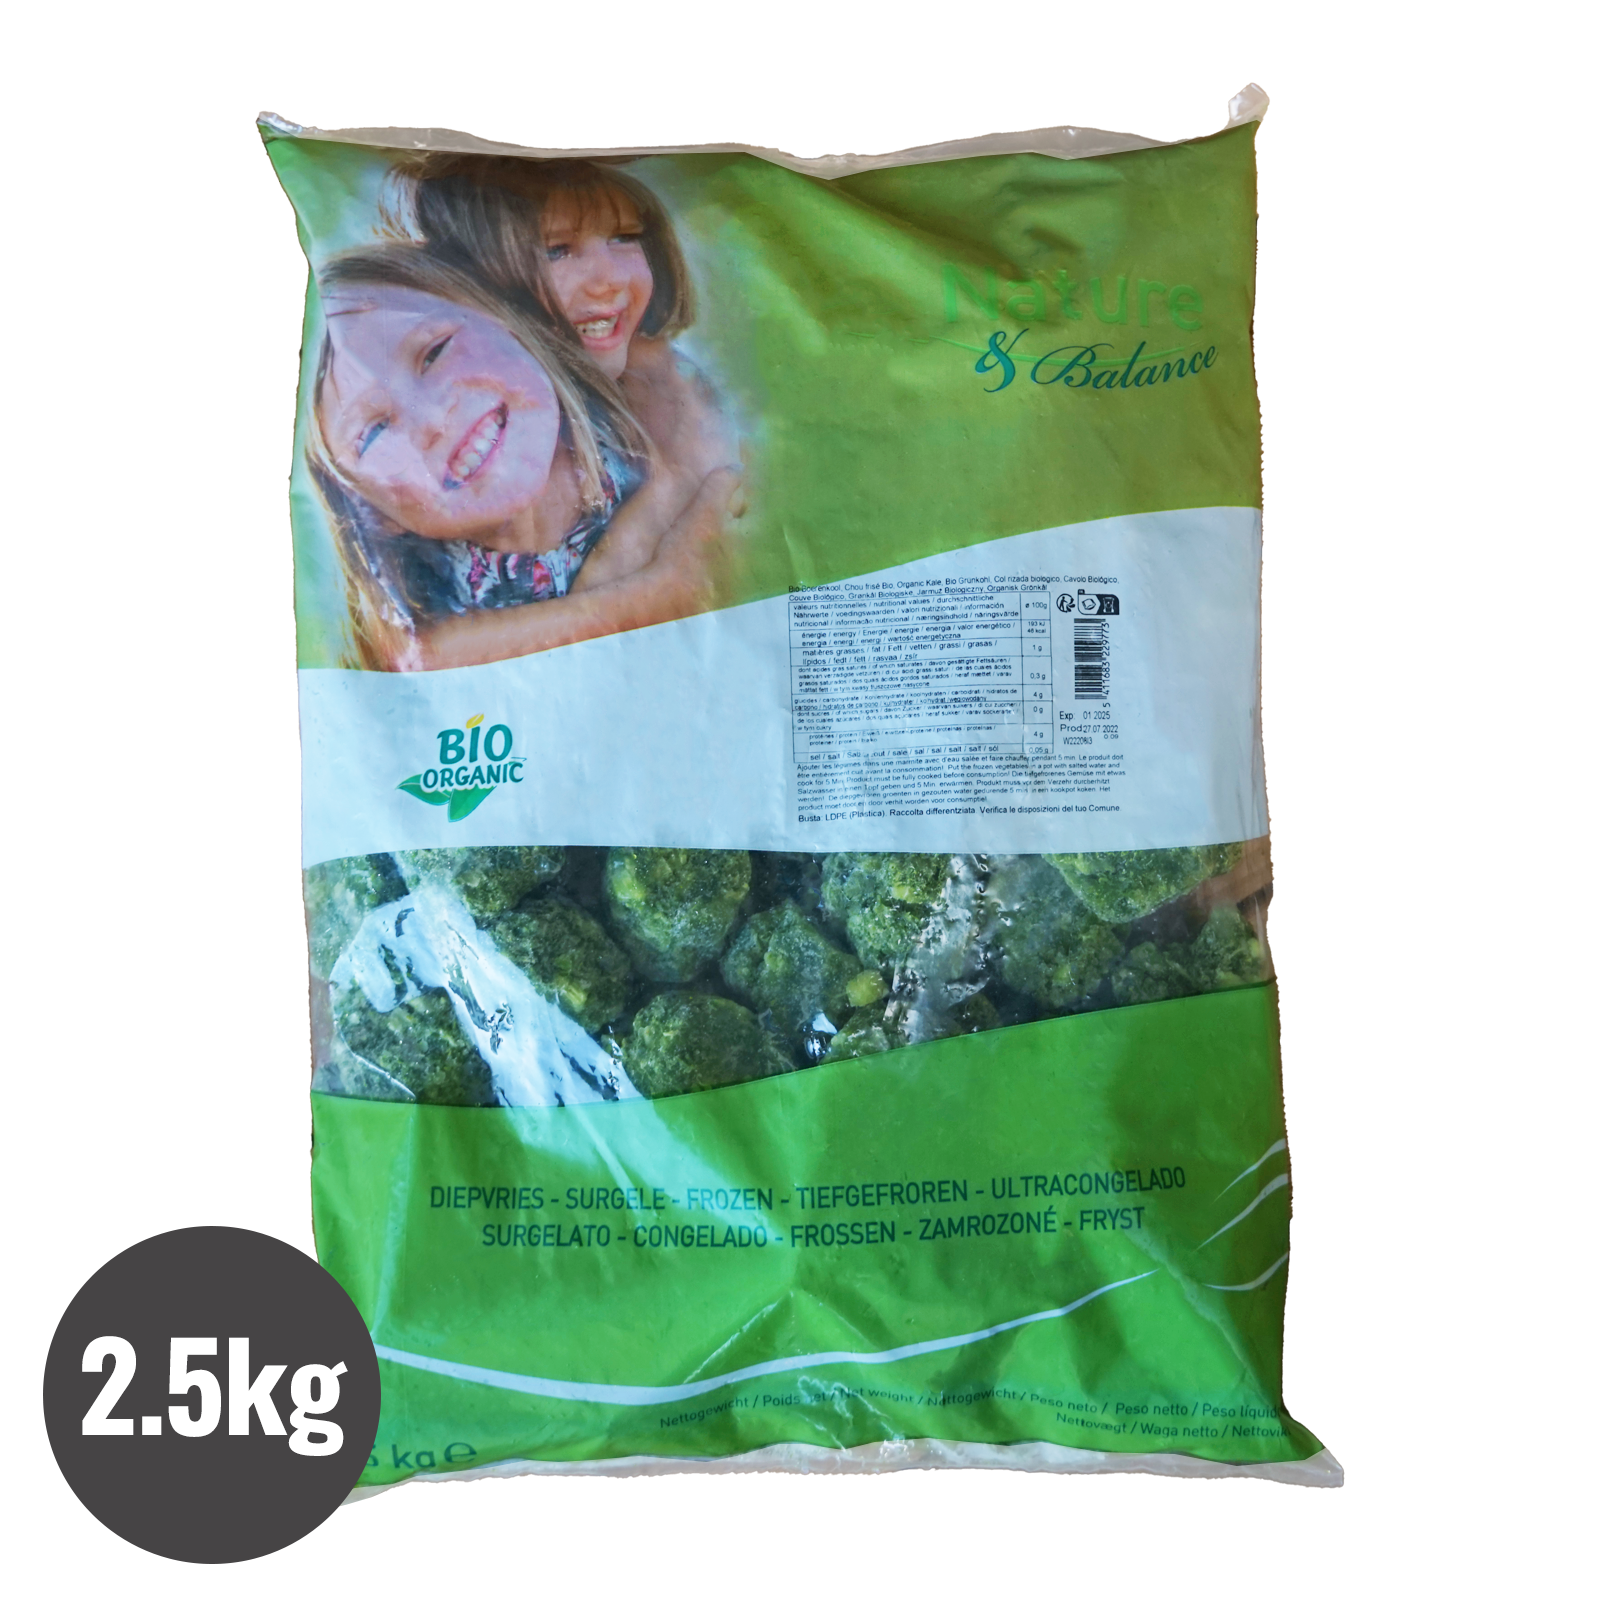 Certified Organic Frozen Kale from Belgium (1kg - 2.5kg) - Horizon Farms